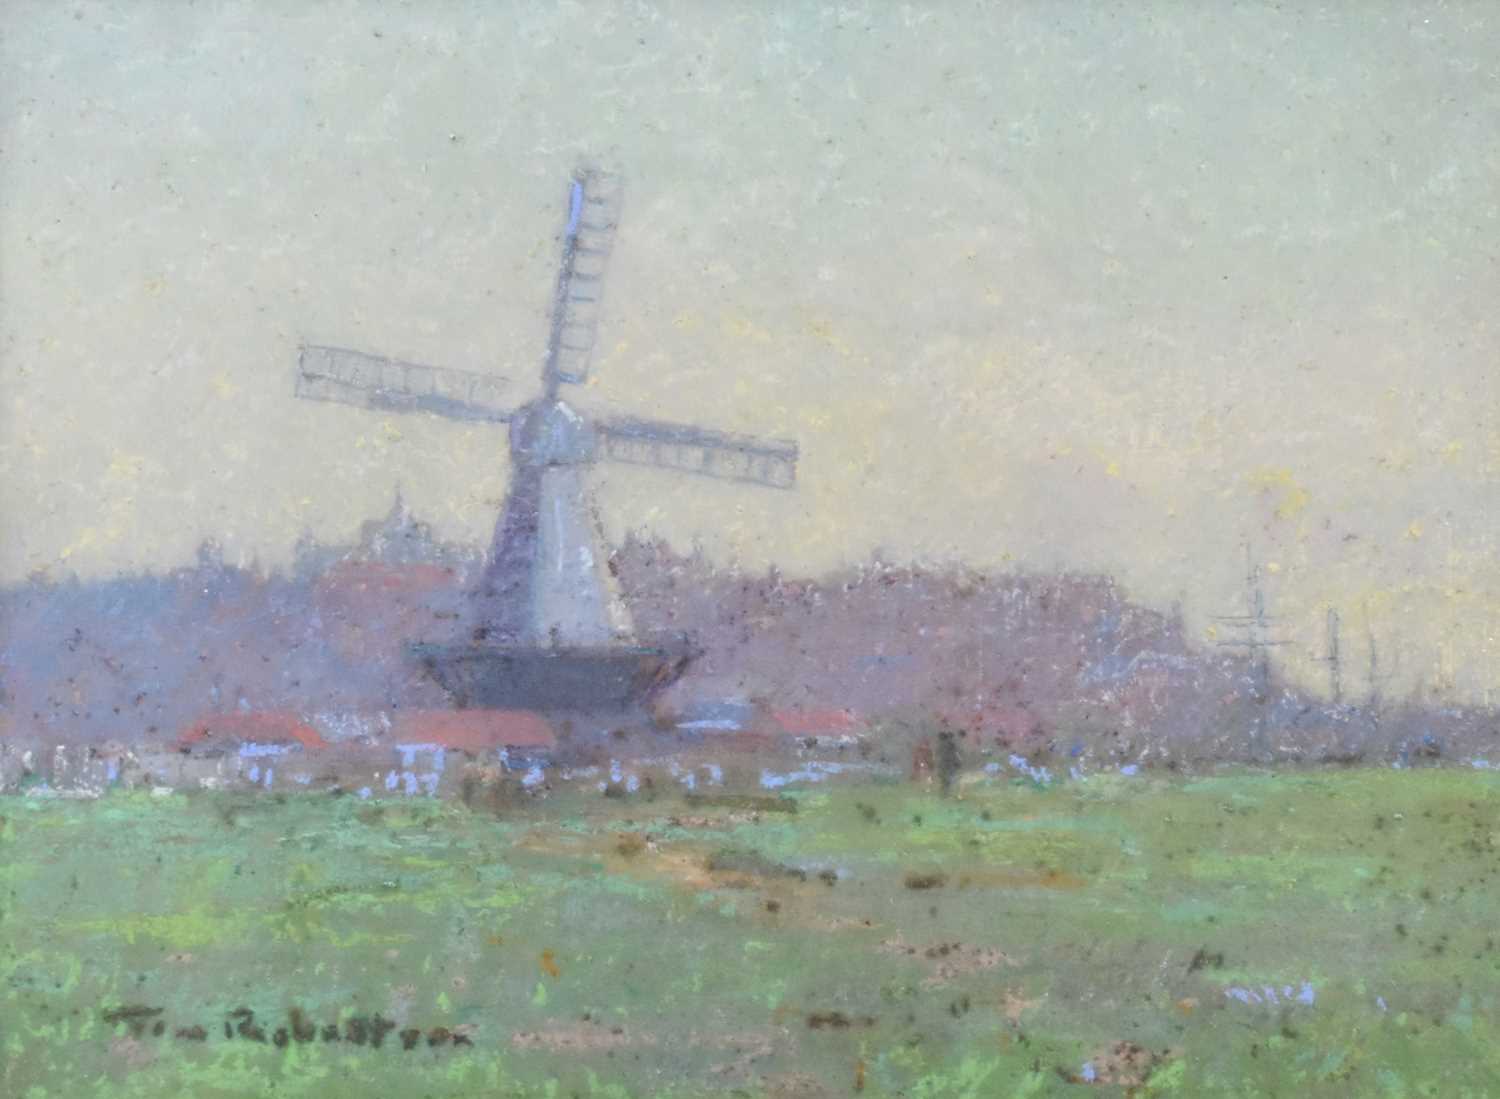 Tom Robertson (British, 1850-1947), The Windmill,